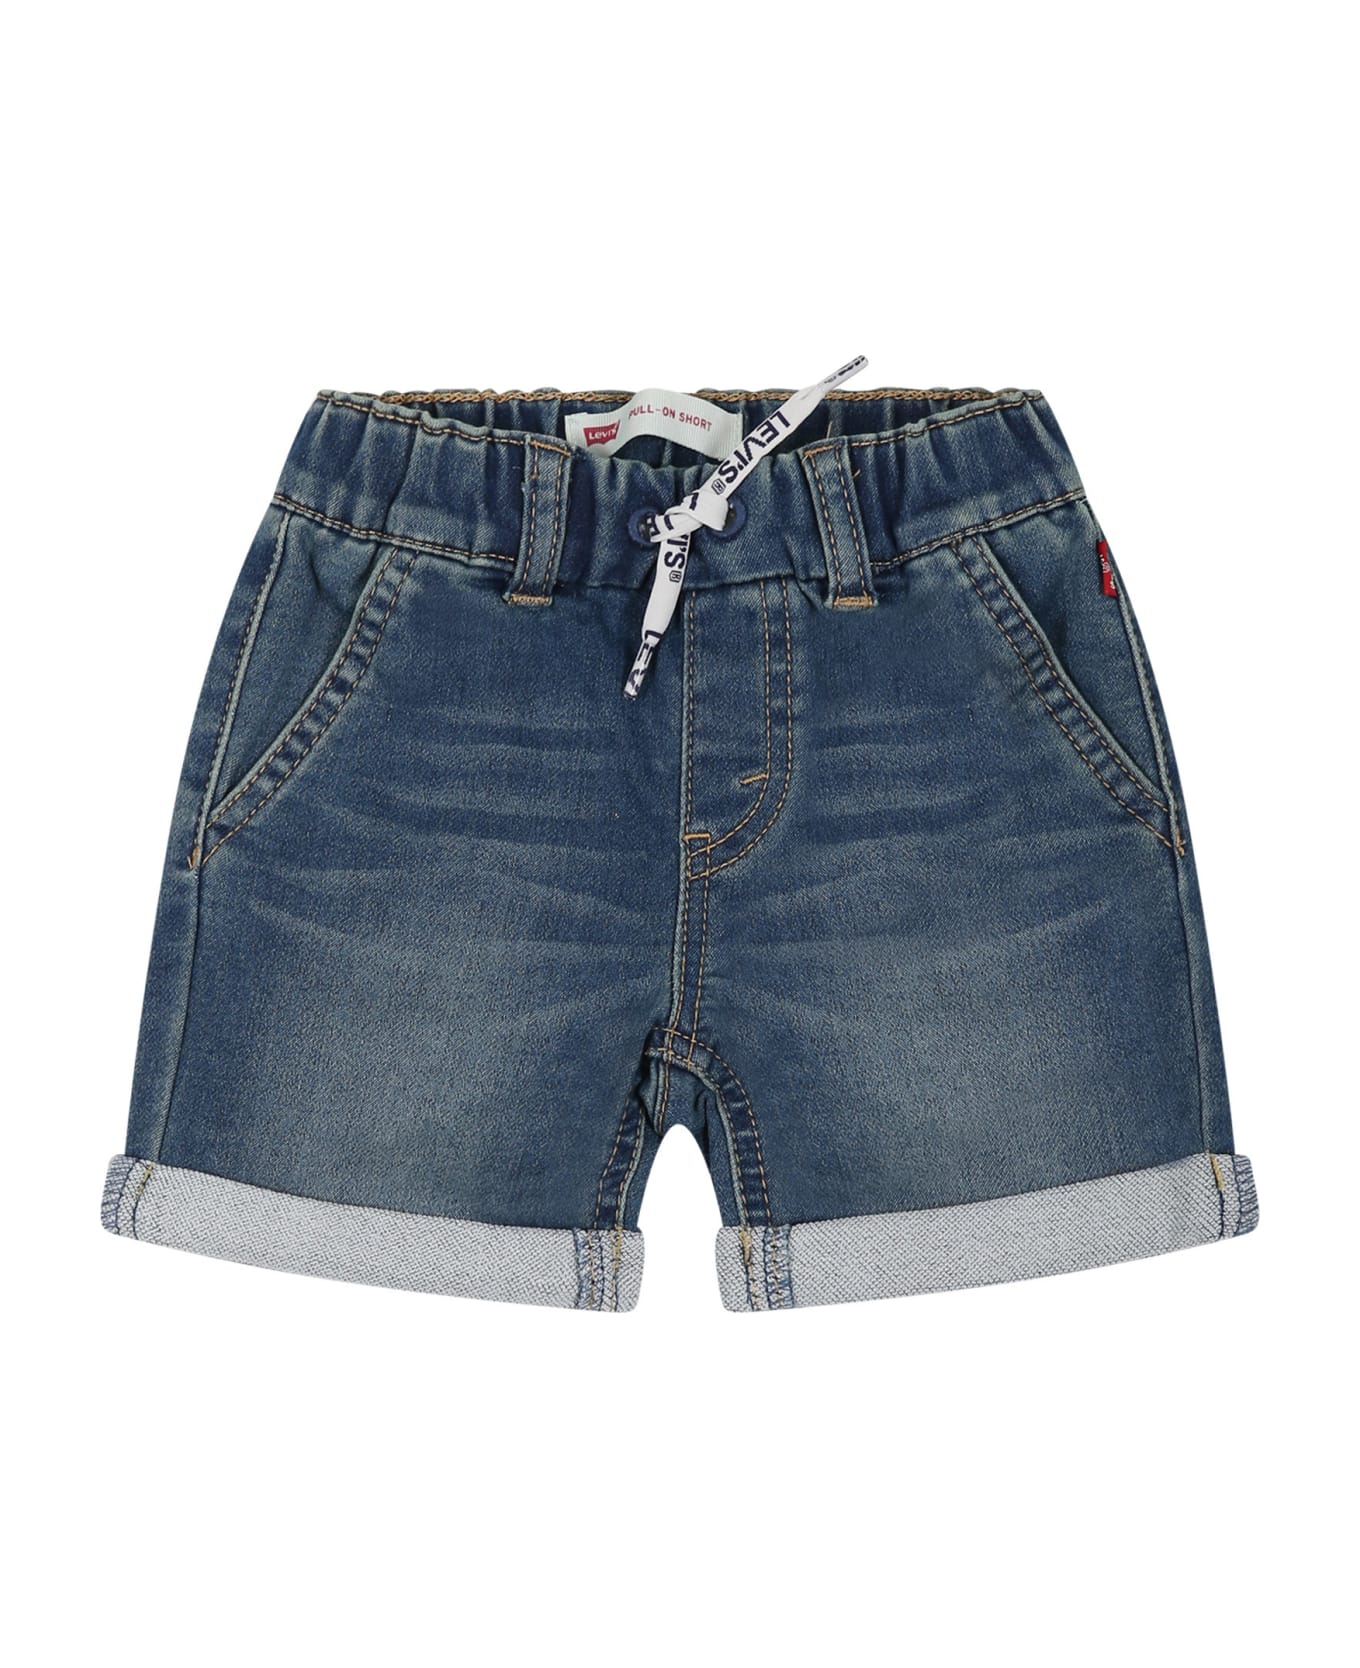 Levi's Blue Shorts For Baby Boy With Logo - Denim